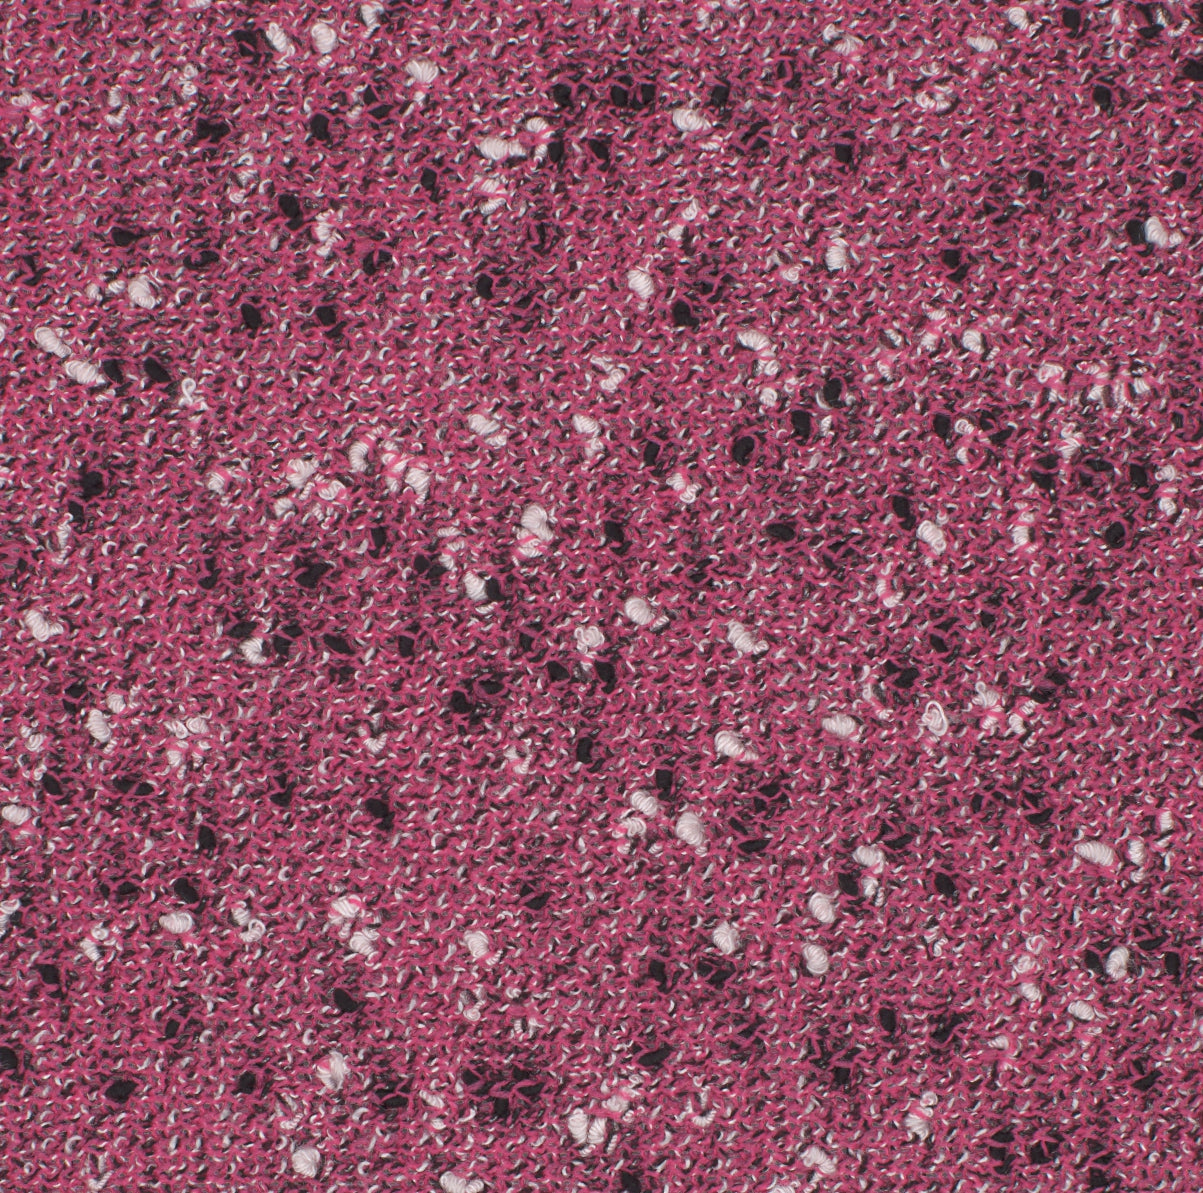 5761-01 Pink Knit Pattern Plain Dyed Blend blend knit pattern pink plain dyed polyester rayon Solid Color - knit fabric - woven fabric - fabric company - fabric wholesale - fabric b2b - fabric factory - high quality fabric - hong kong fabric - fabric hk - acetate fabric - cotton fabric - linen fabric - metallic fabric - nylon fabric - polyester fabric - spandex fabric - chun wing hing - cwh hk - fabric worldwide ship - 針織布 - 梳織布 - 布料公司- 布料批發 - 香港布料 - 秦榮興